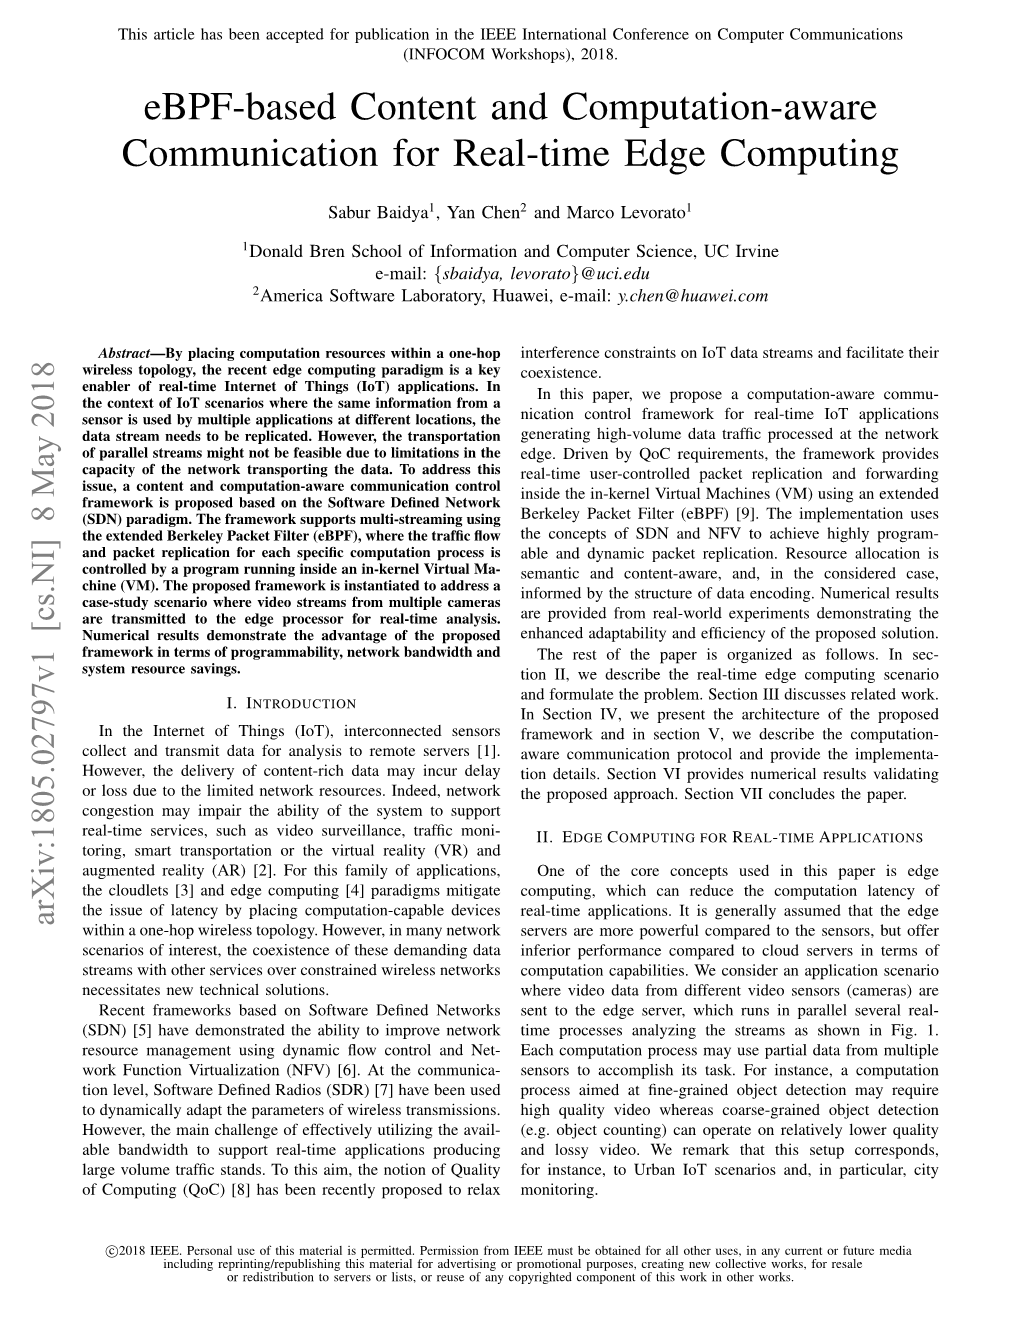 Ebpf-Based Content and Computation-Aware Communication for Real-Time Edge Computing